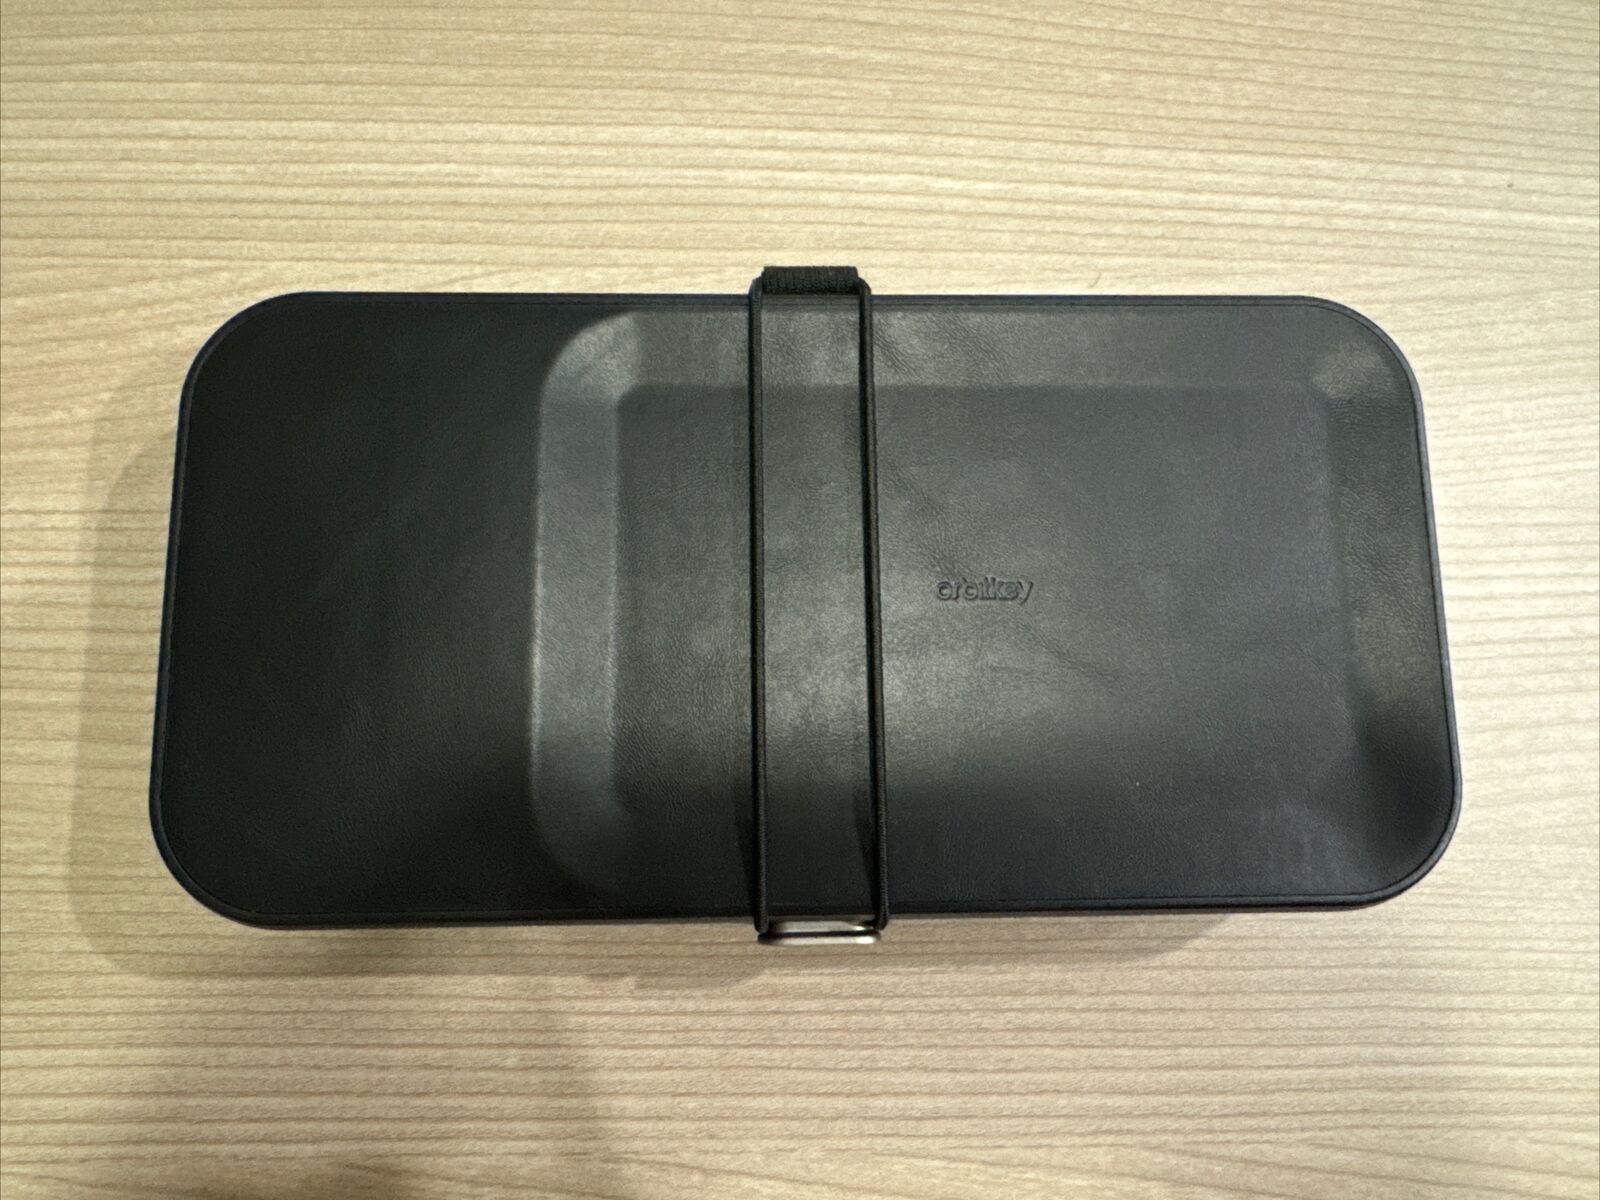 Orbitkey Nest Portable & Personal Desk Organizer Case w/ Wireless Charger -Black